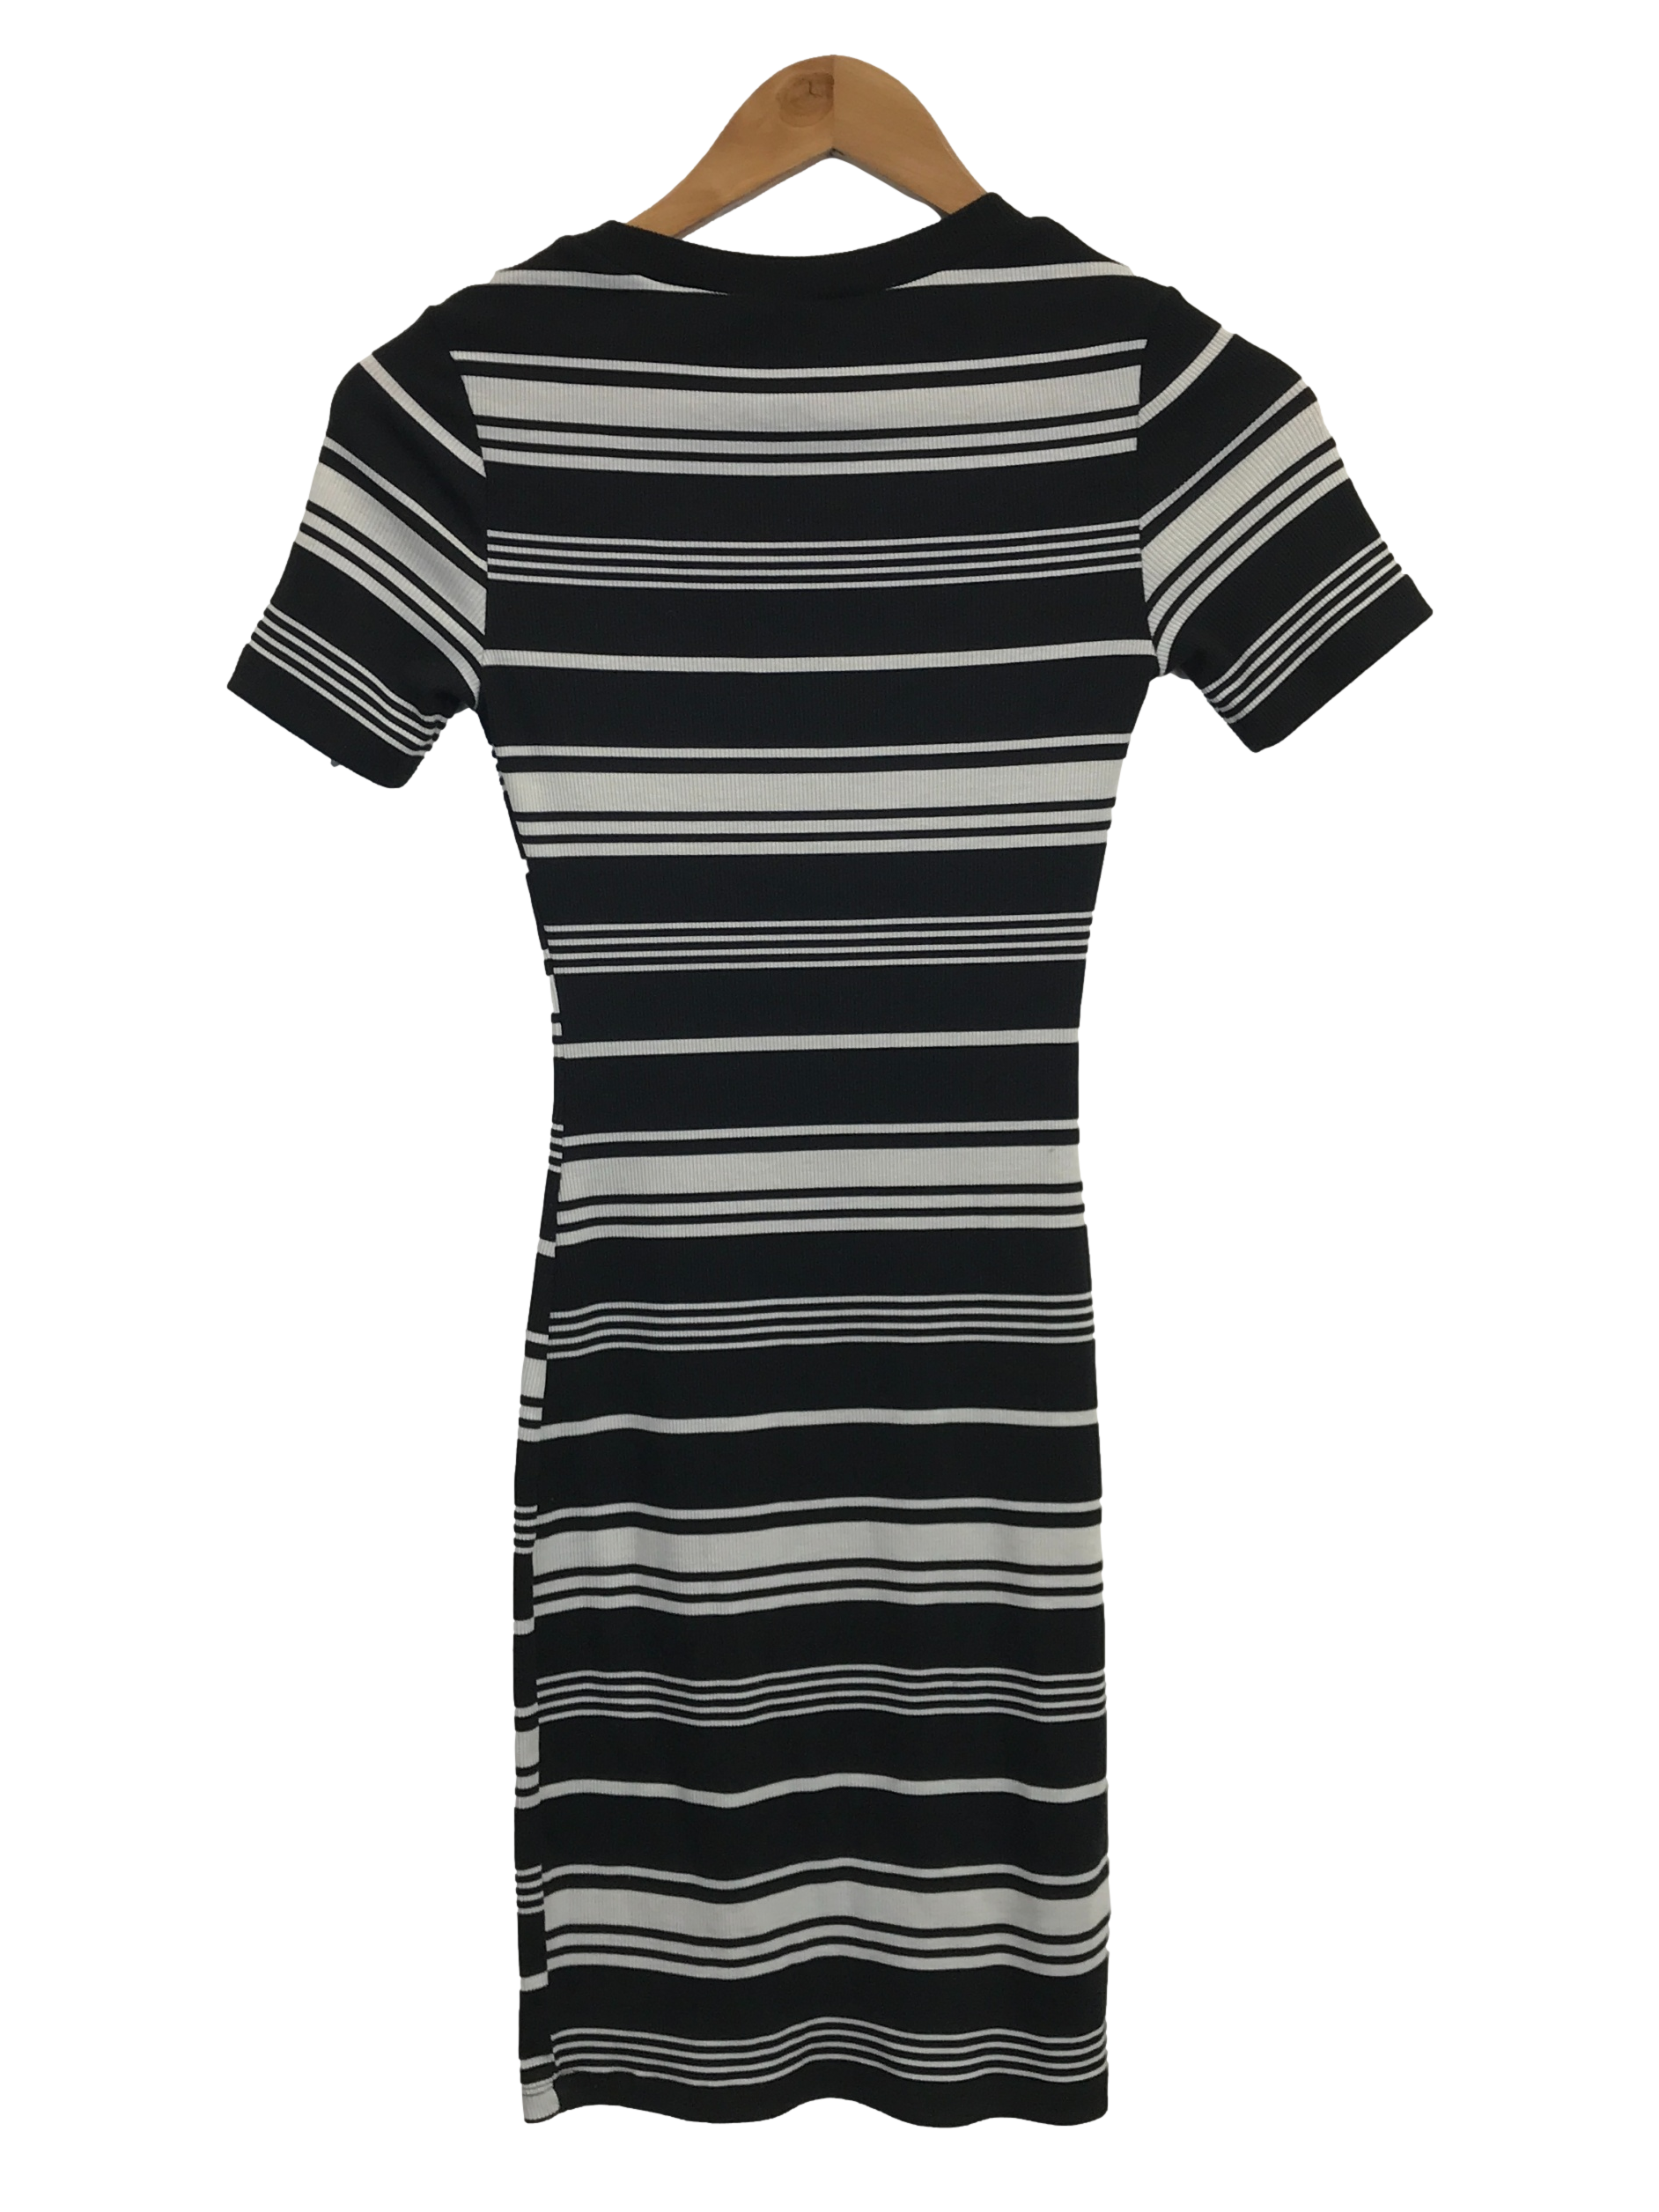 Black And White Horizontal Stripes Dress